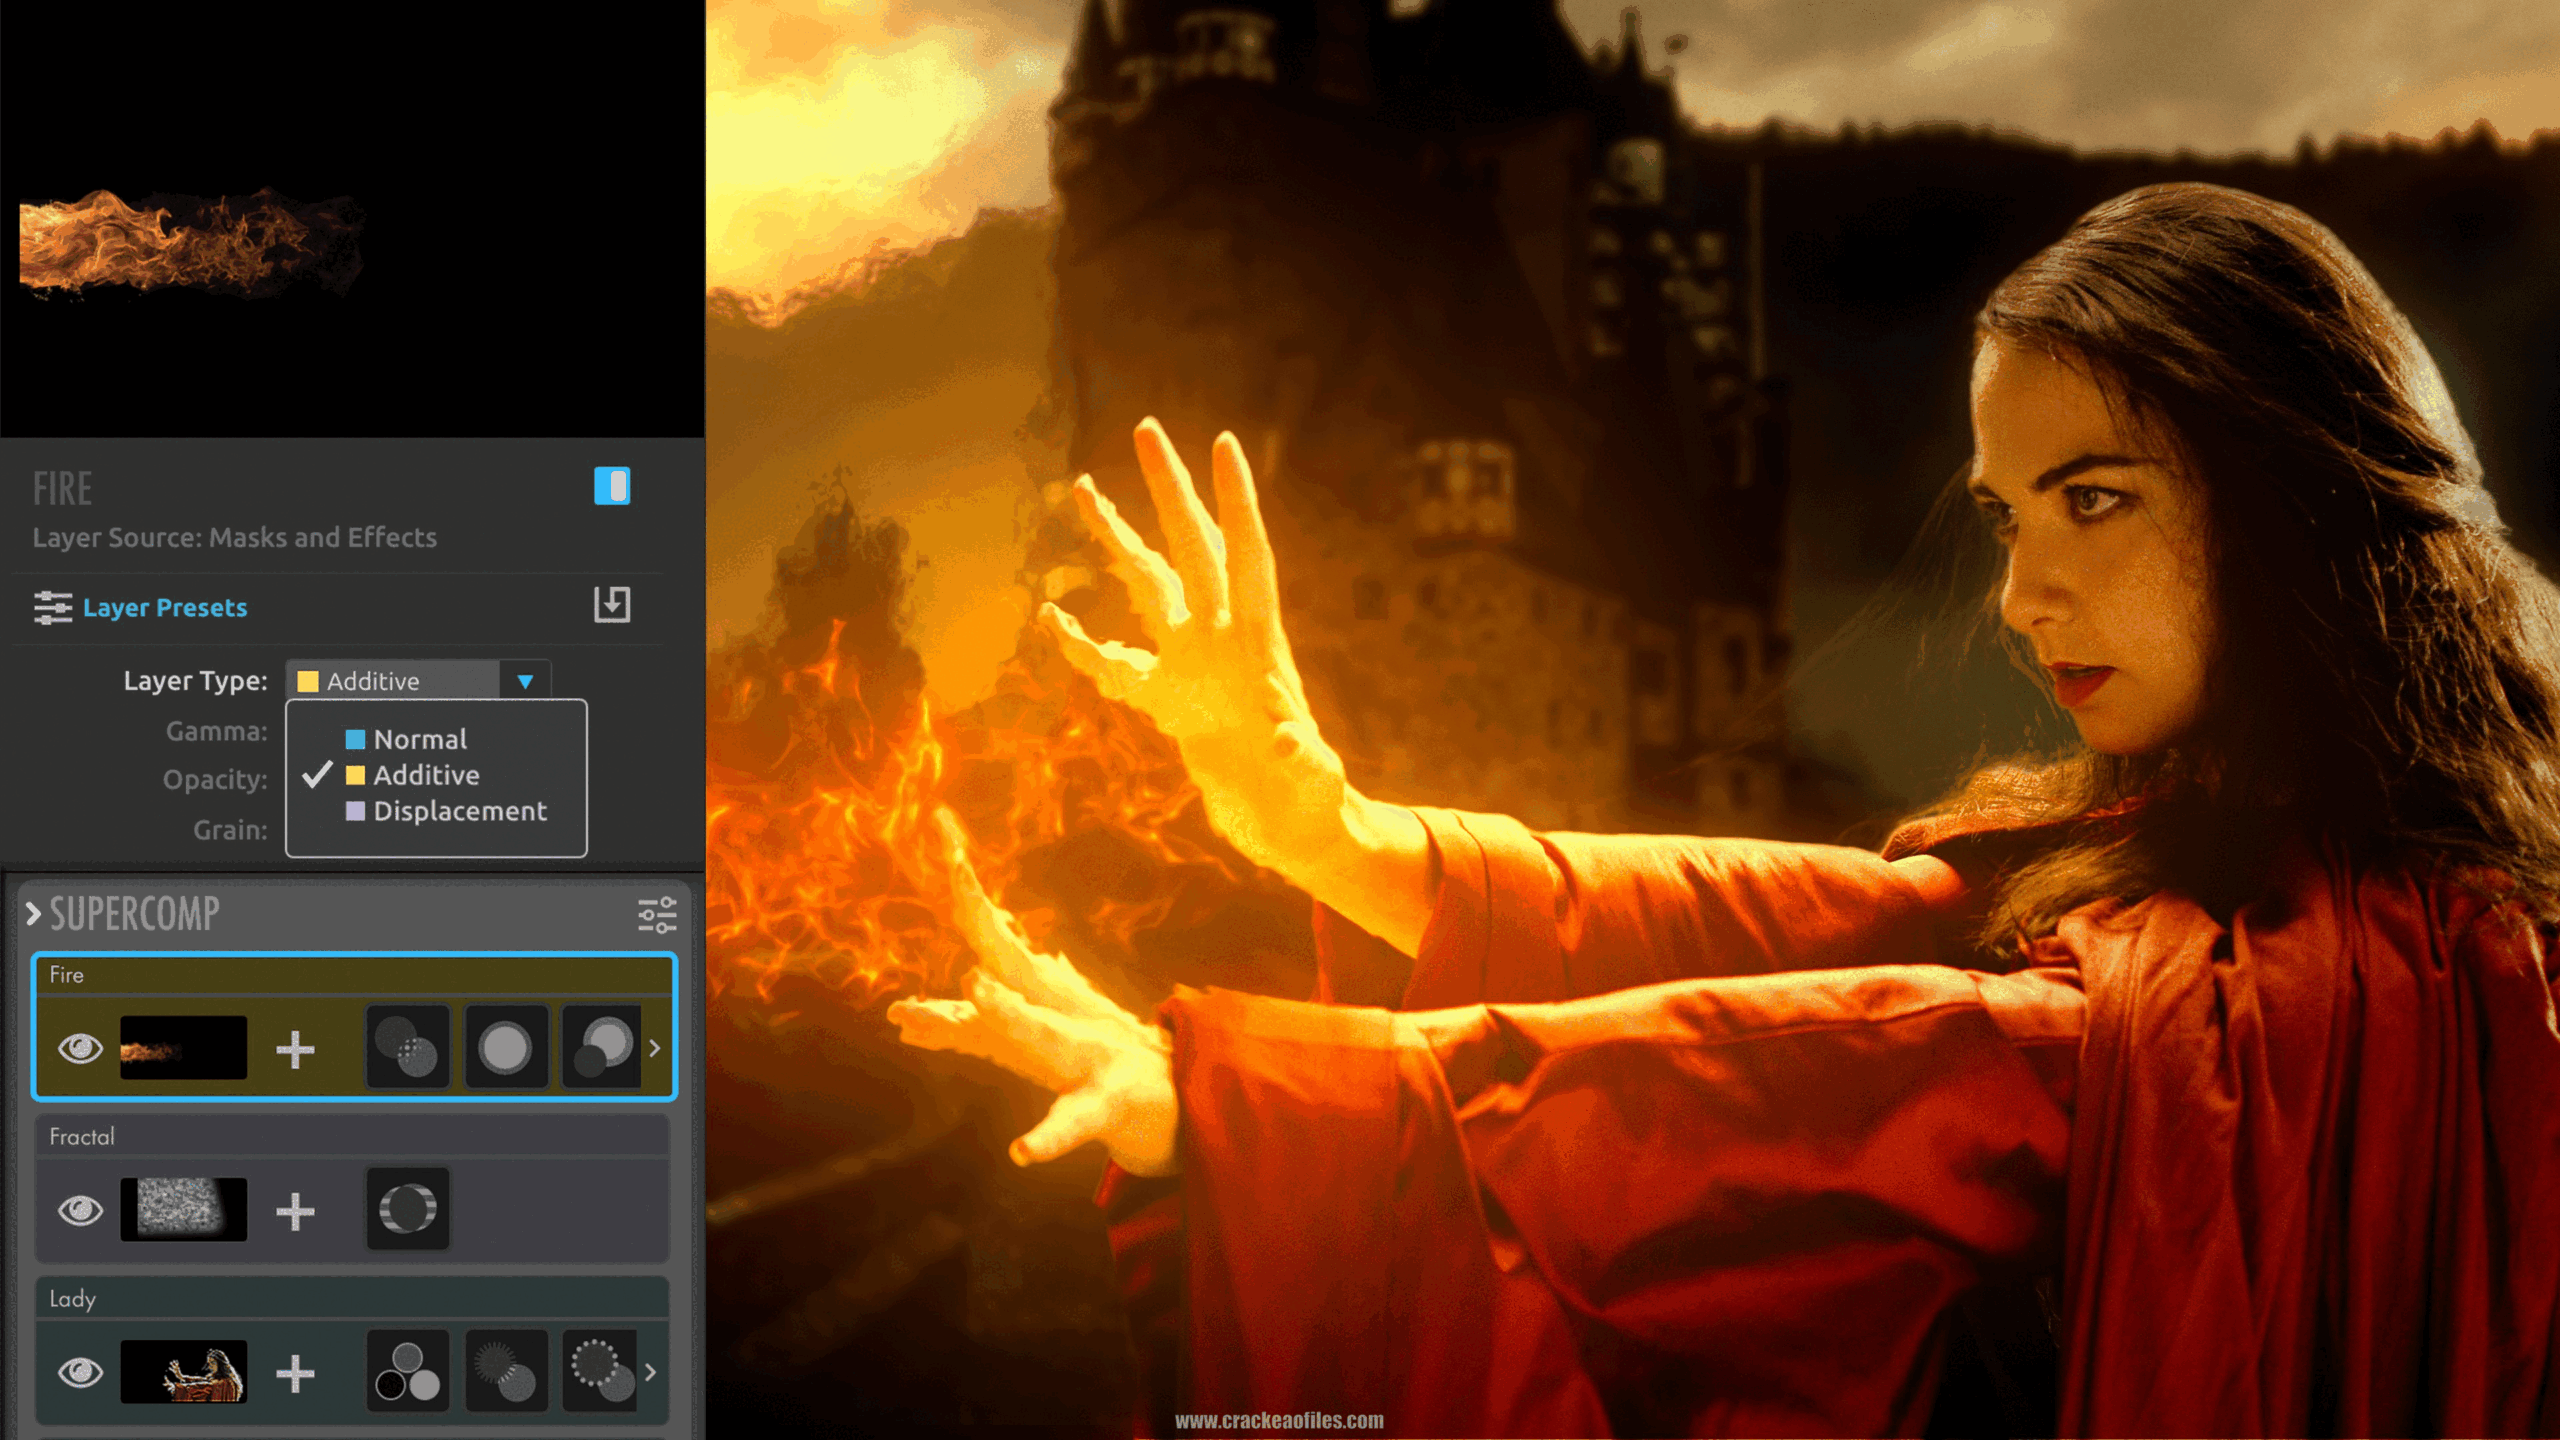 Red Giant VFX Suite Crackeado